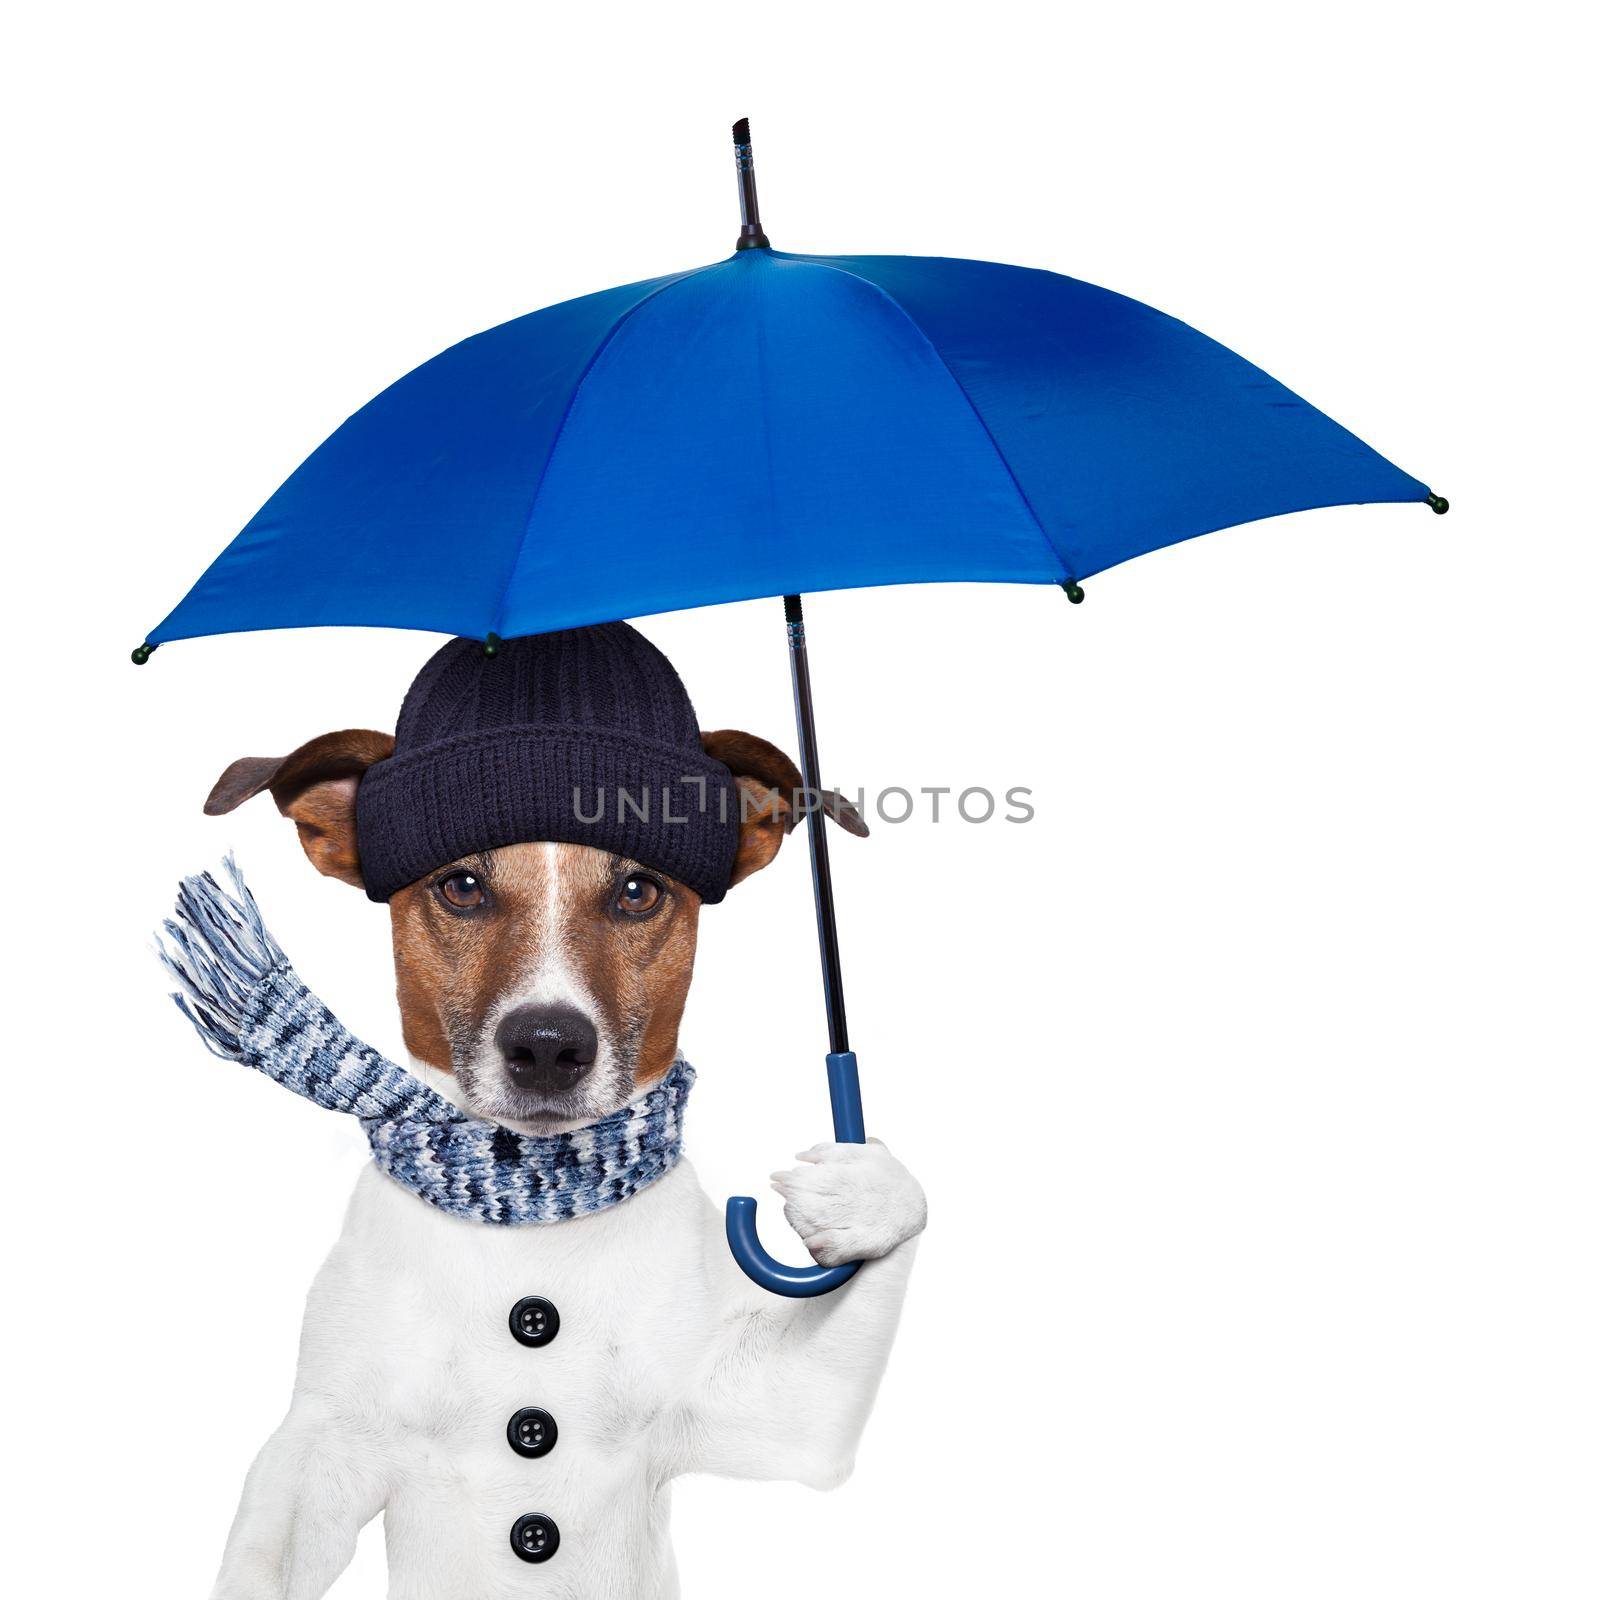 rain umbrella dog by Brosch